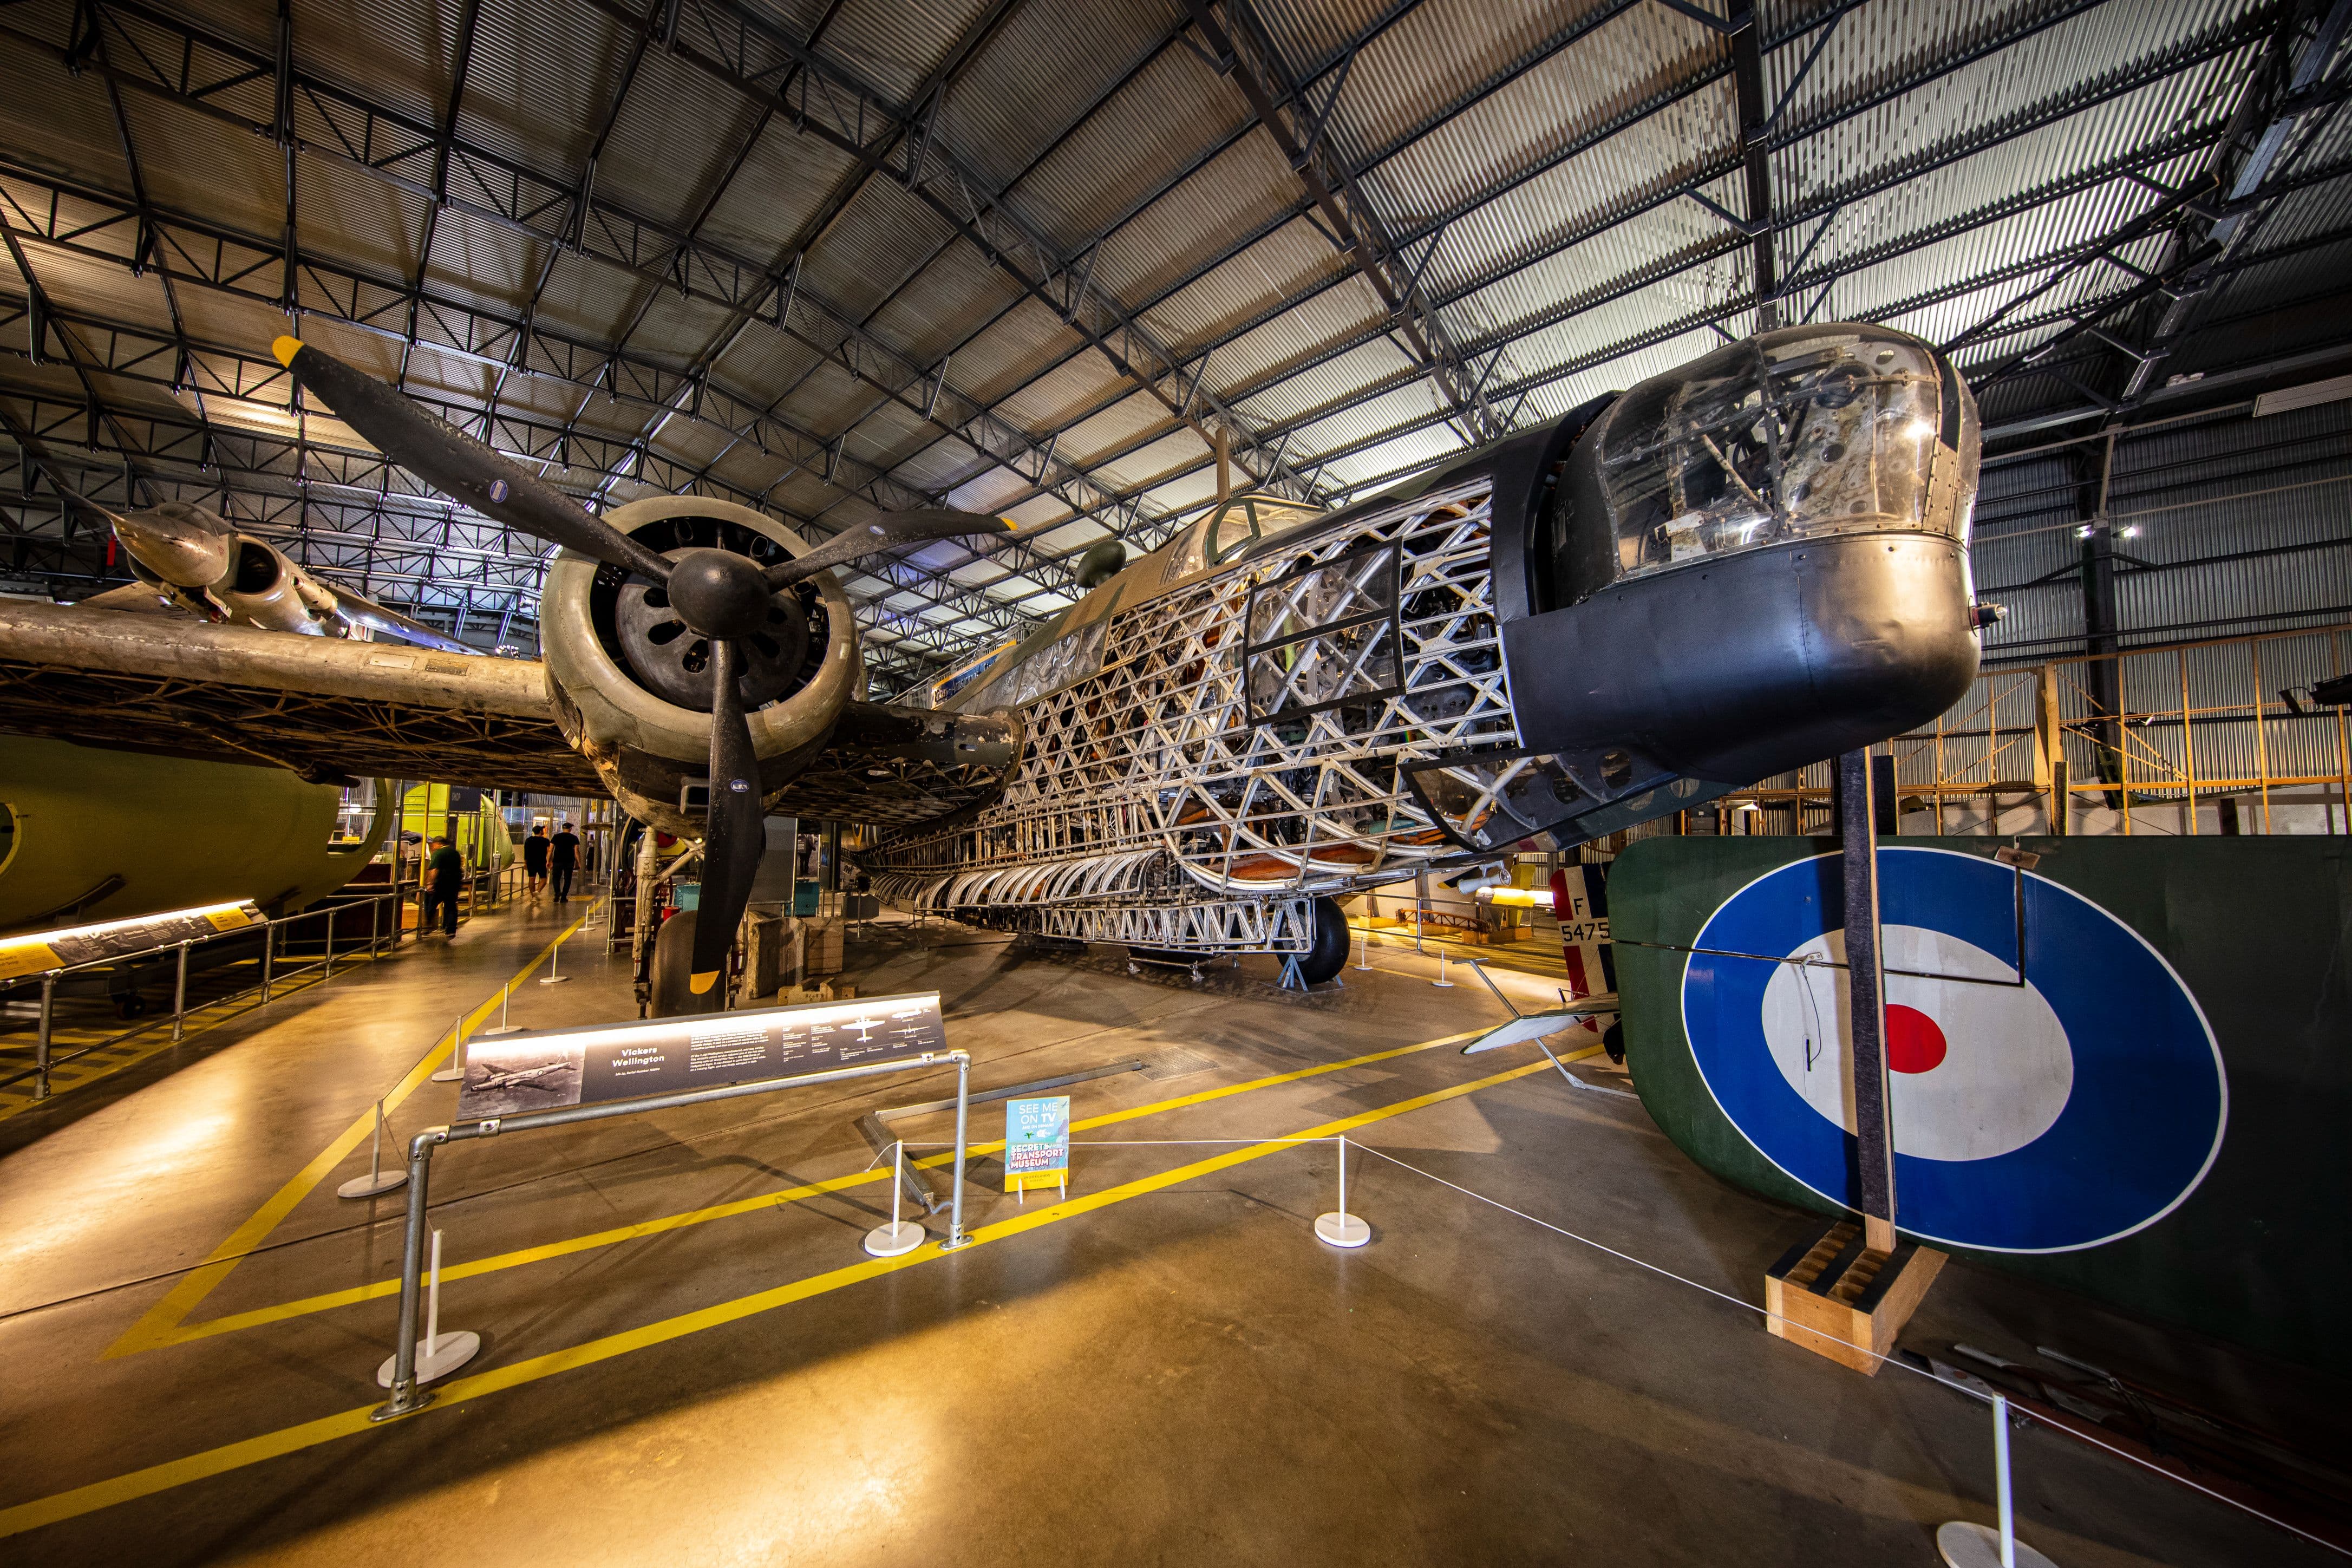 RAF Plane on display at Brooklands museum